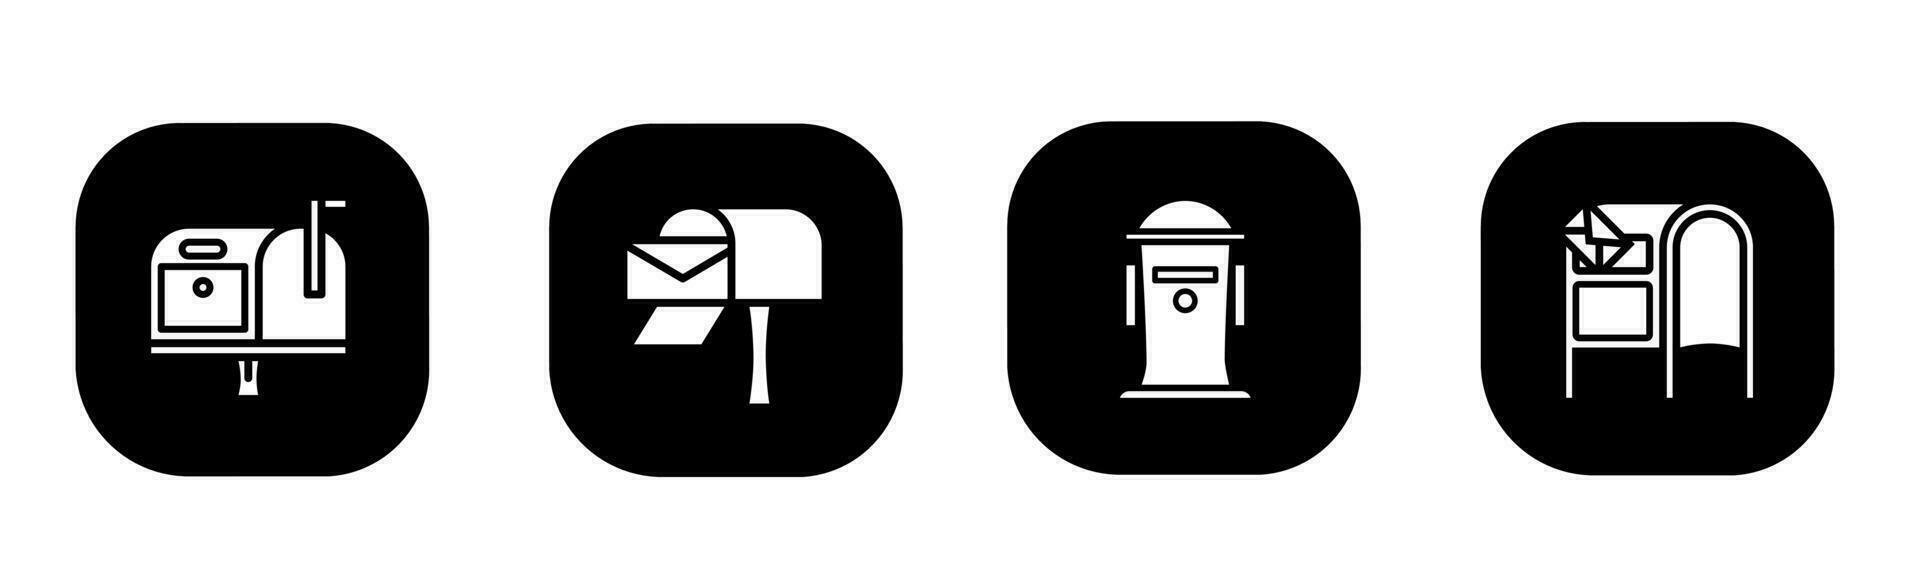 Mailbox icon in flat. A mailbox icon design. Stock vector. vector